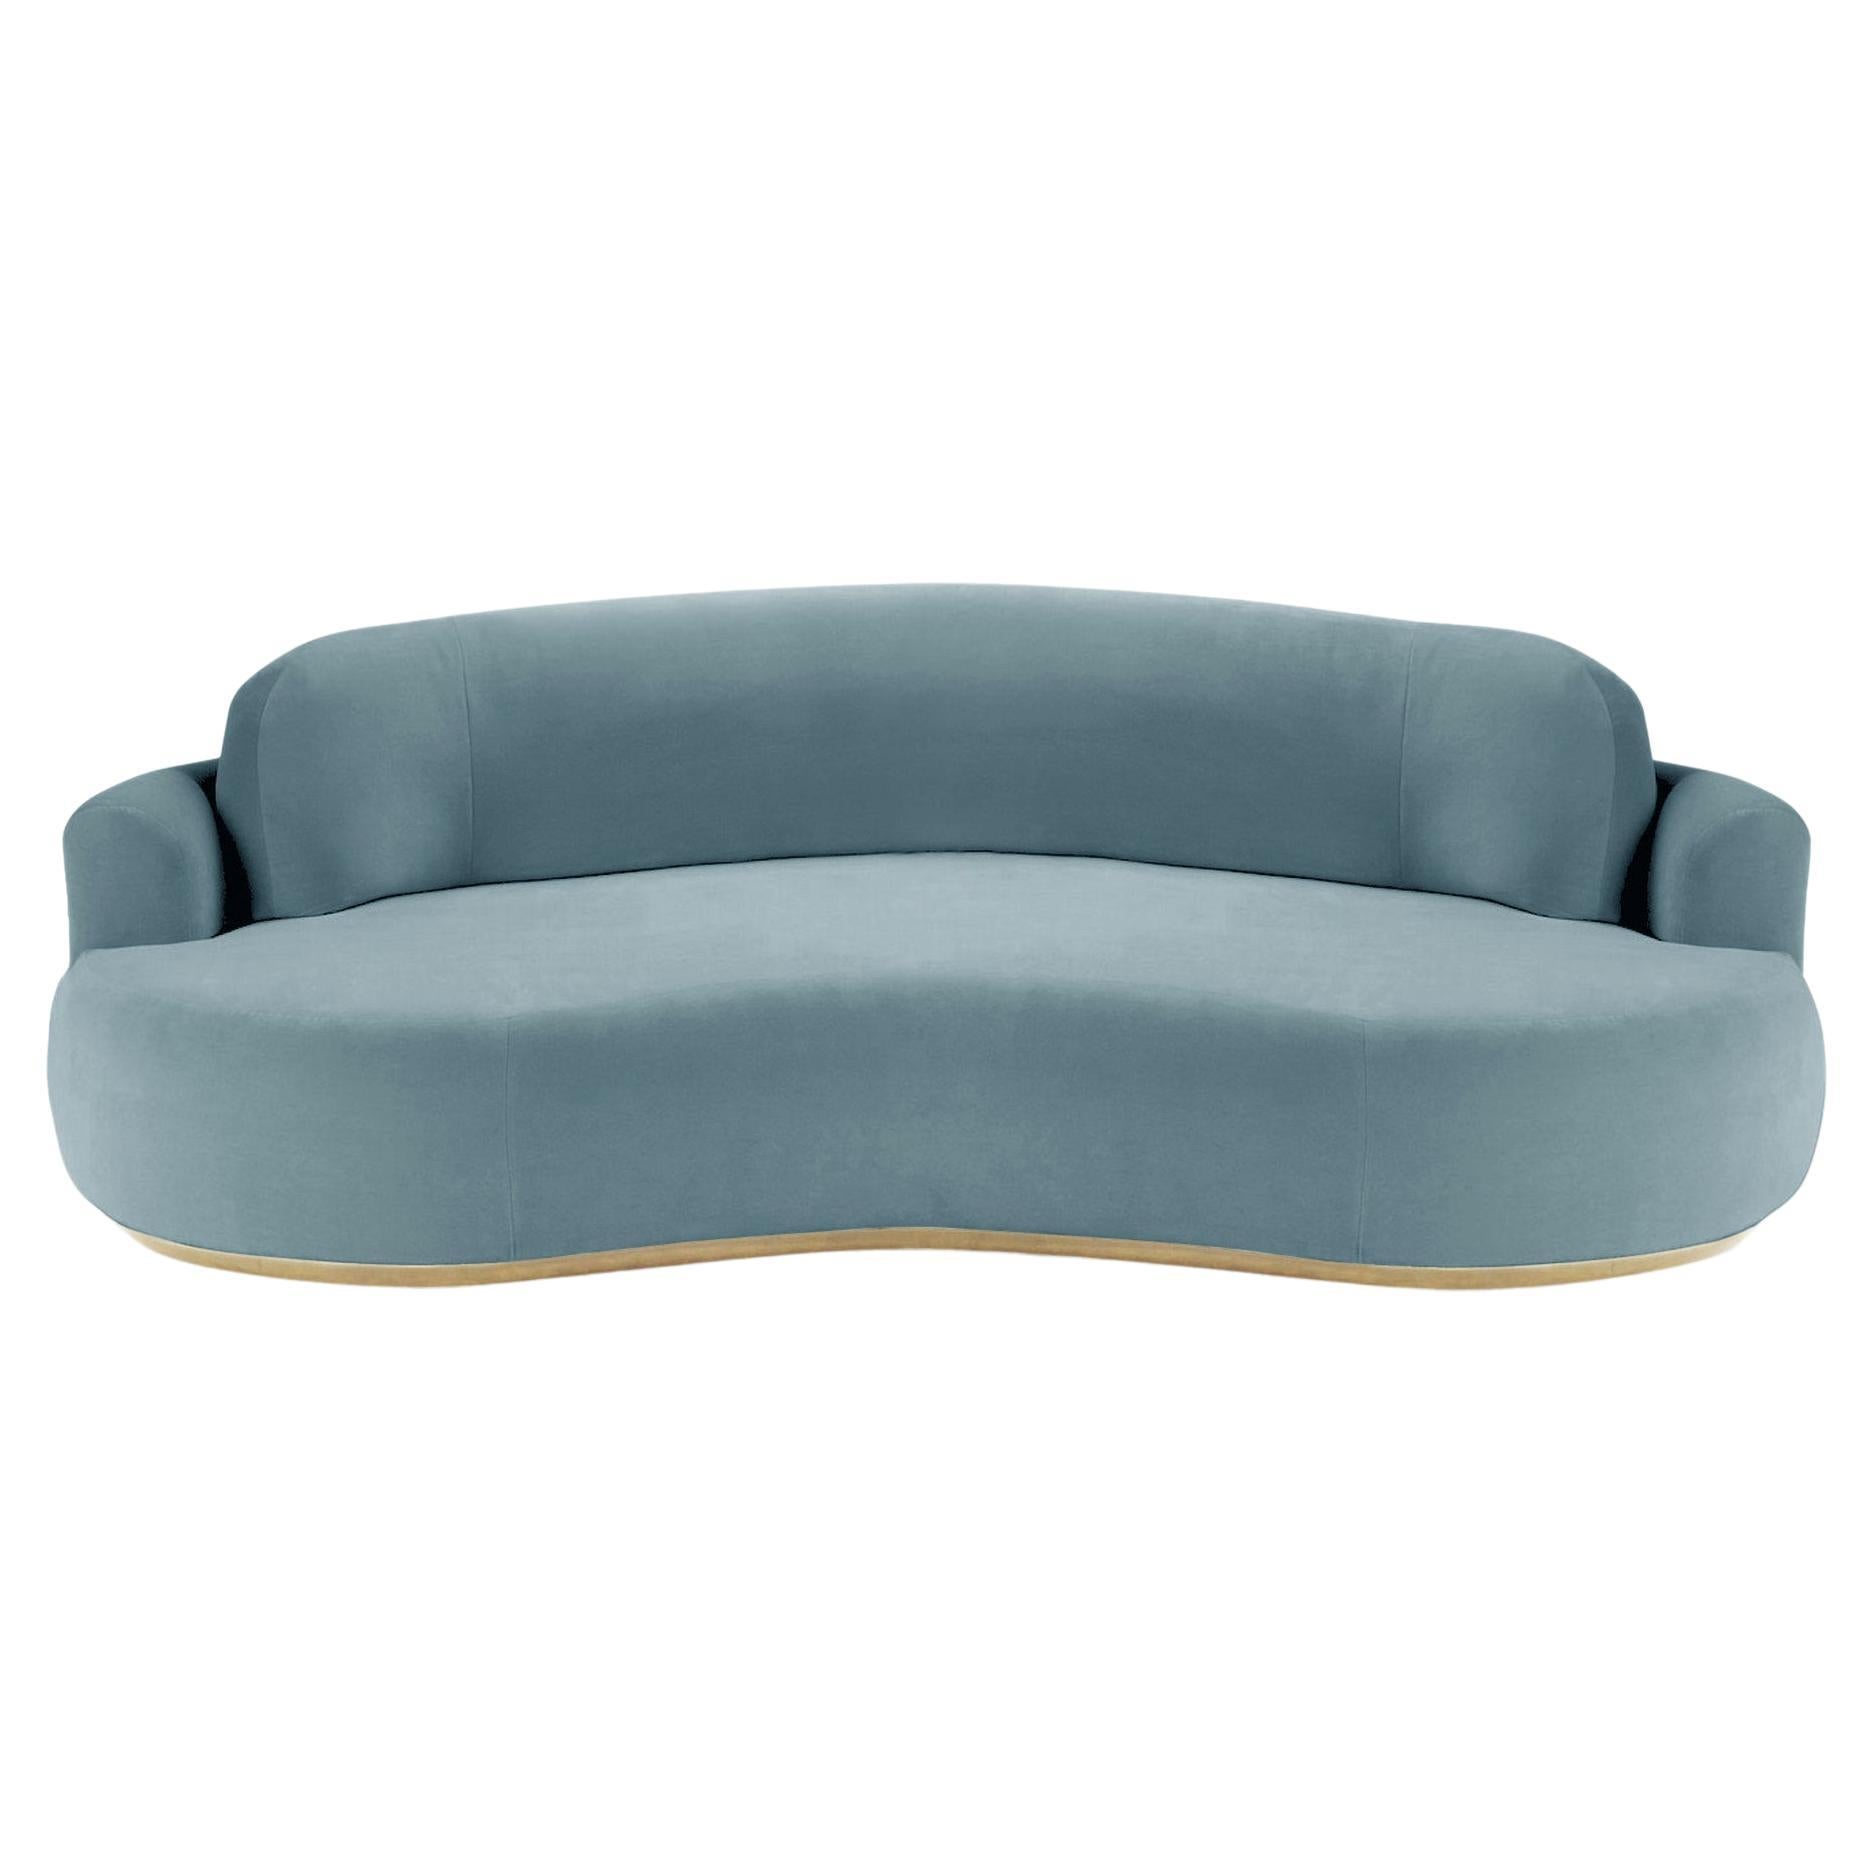 Naked Curved Sofa, Medium with Natural Oak and Paris Dark Blue